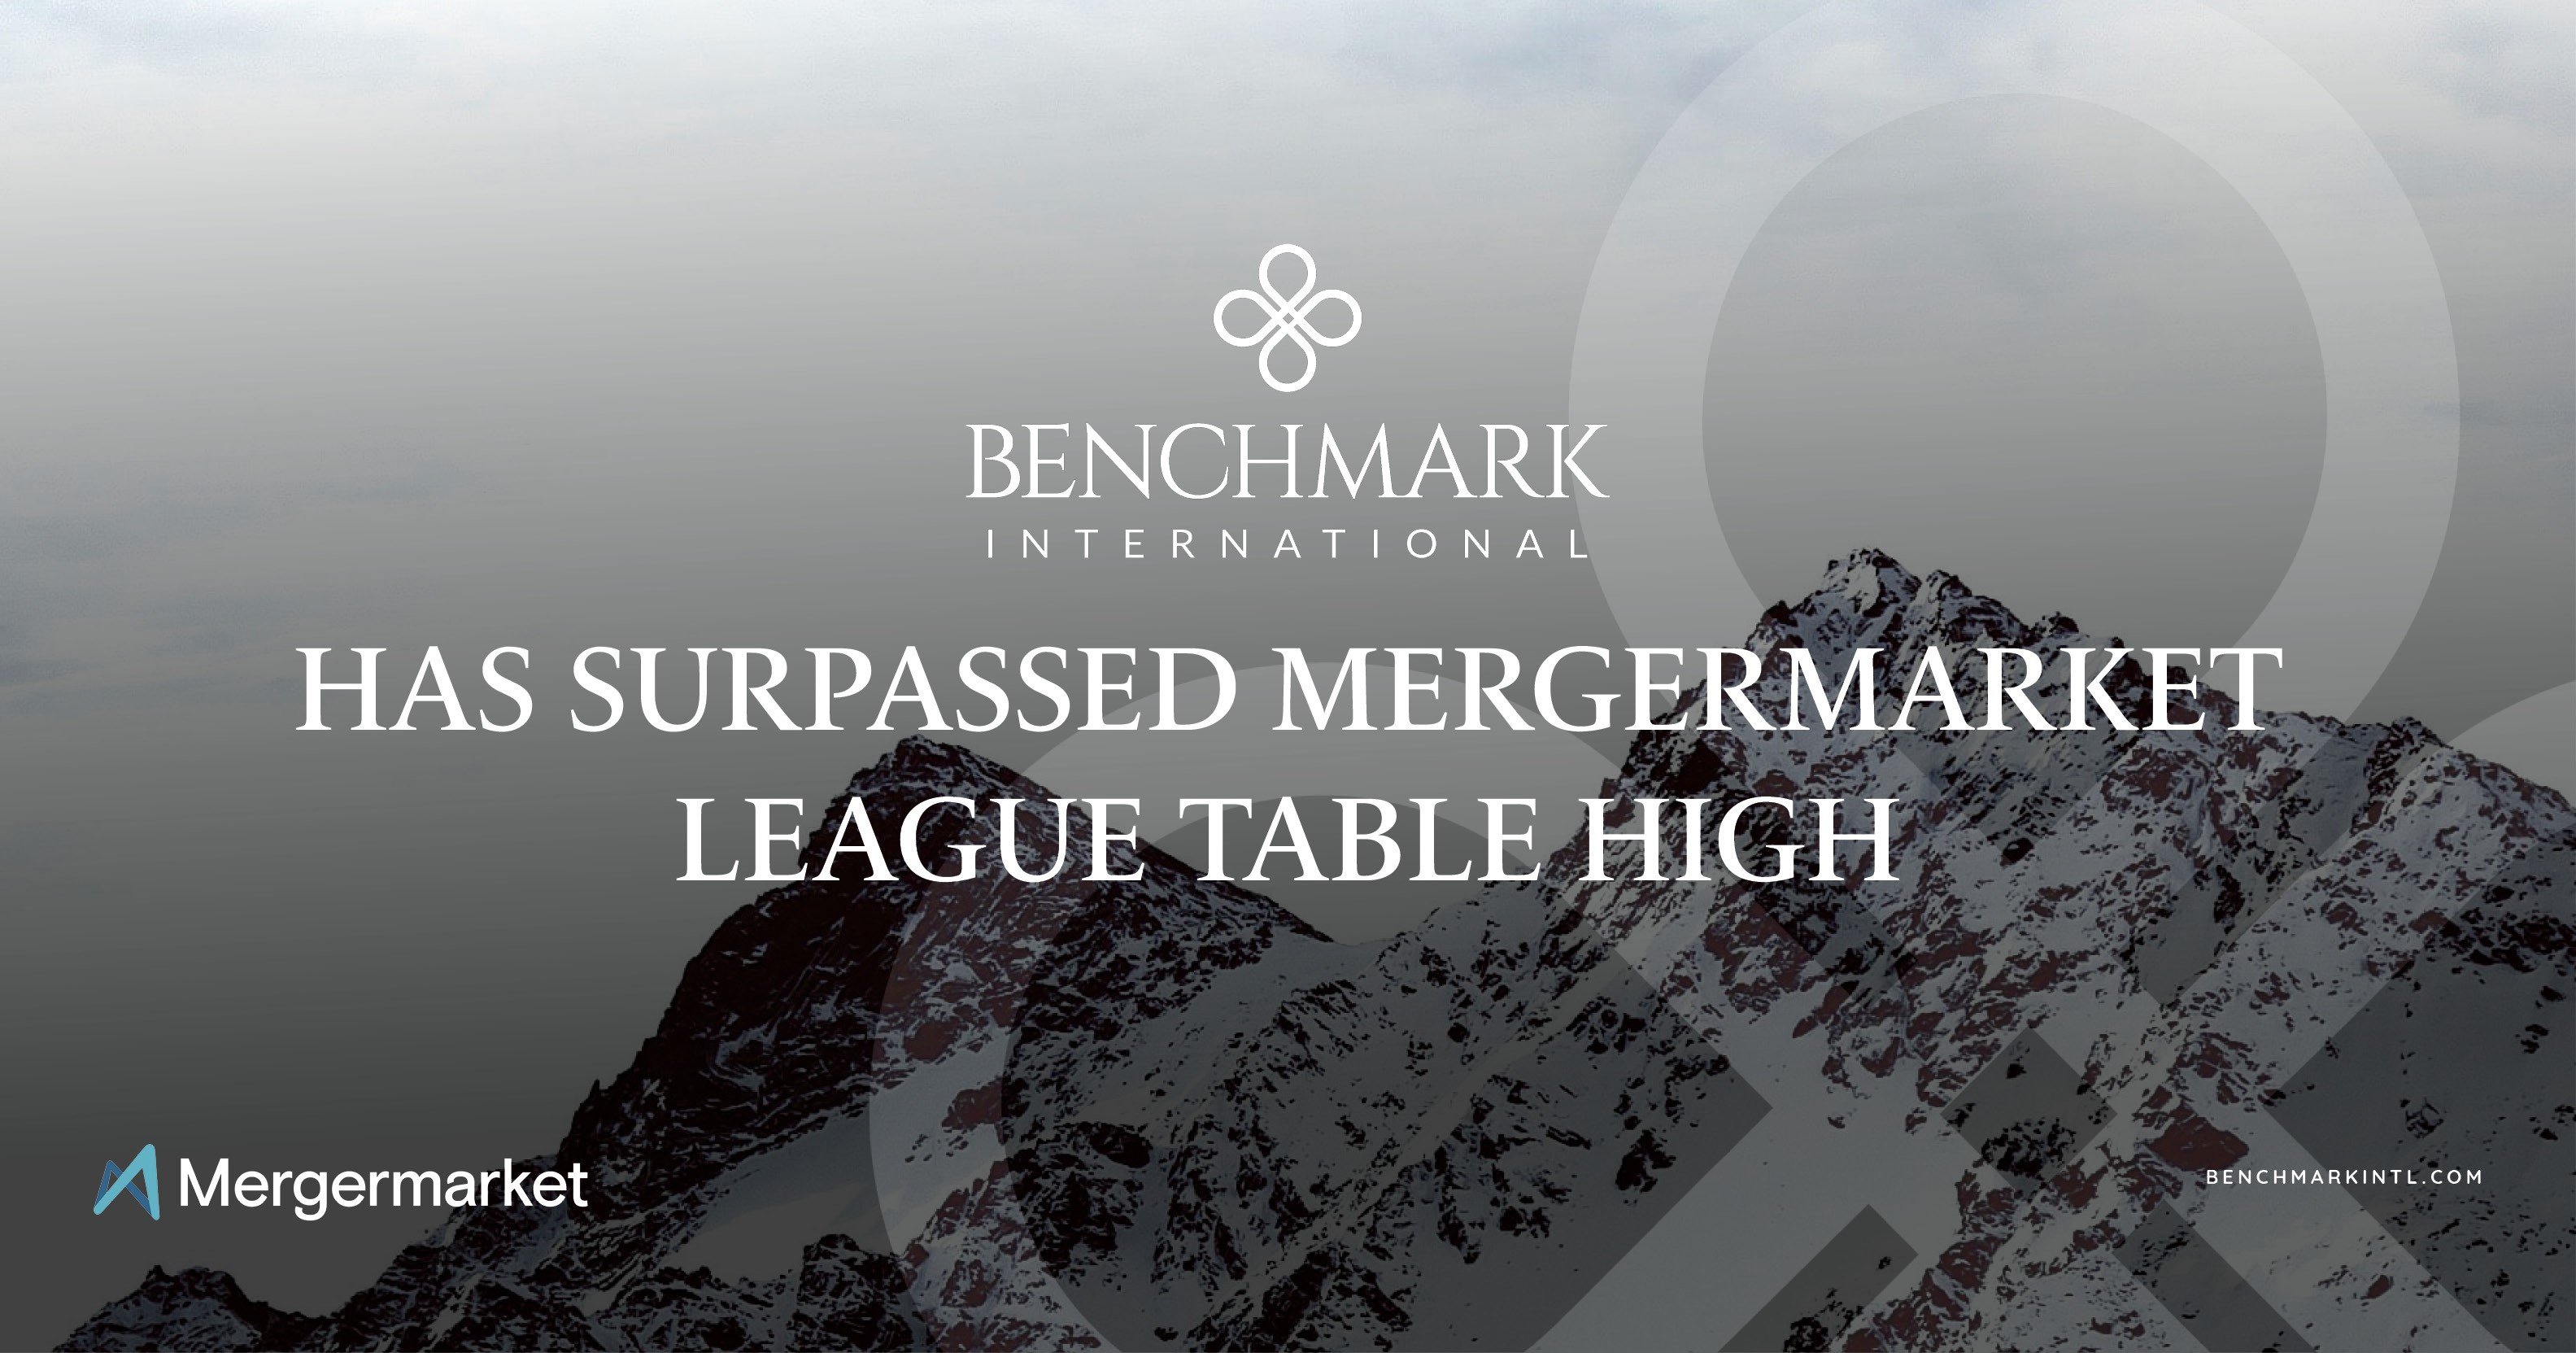 Benchmark International has Surpassed Mergermarket League Table High